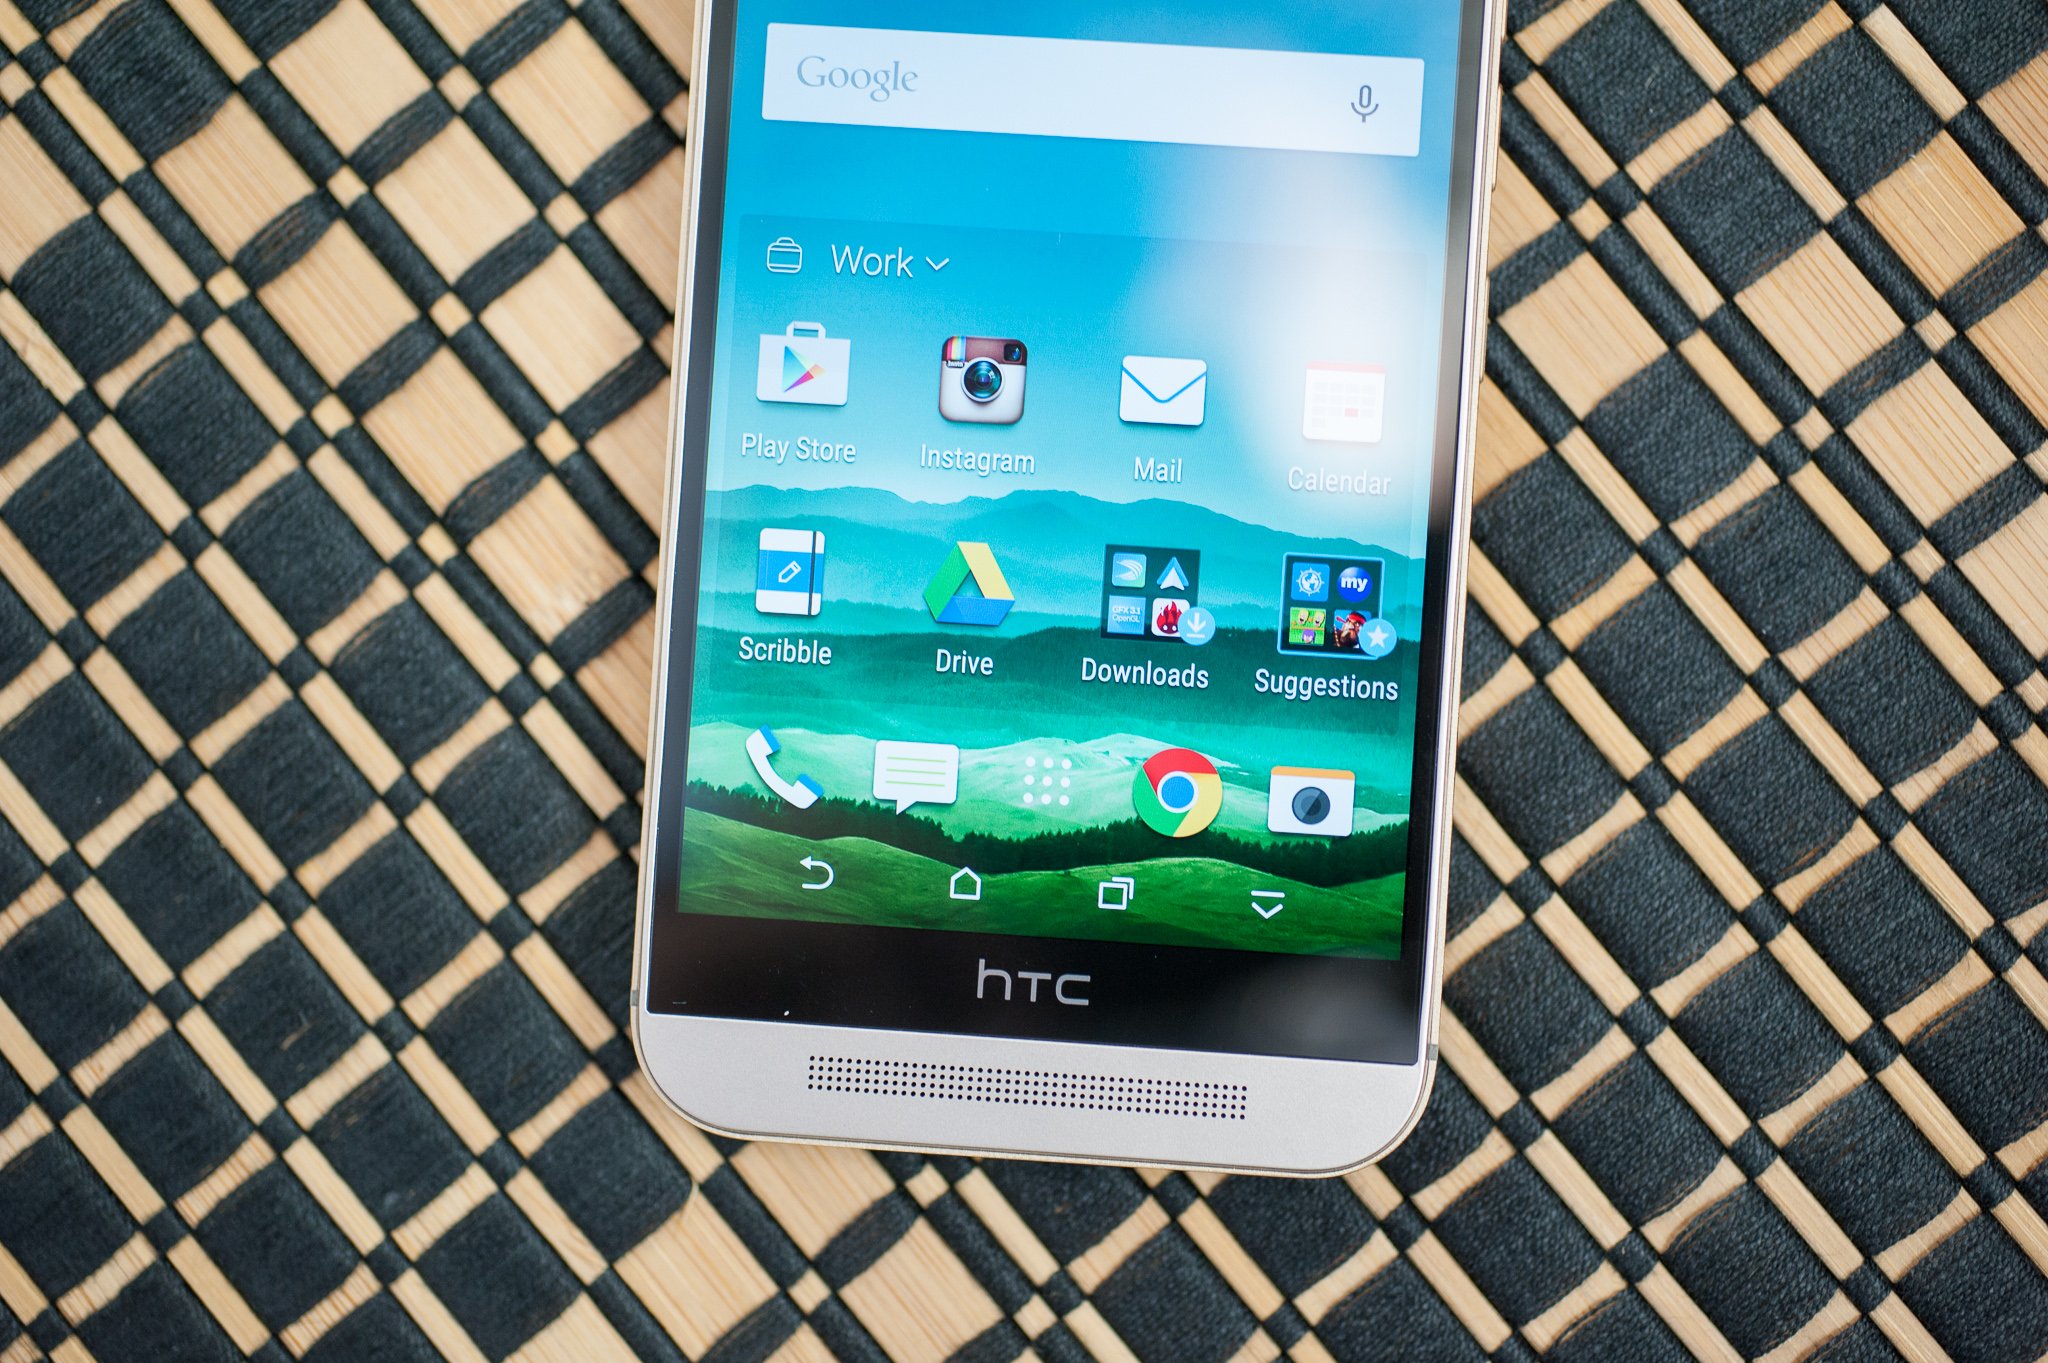 HTC One M9 home screen